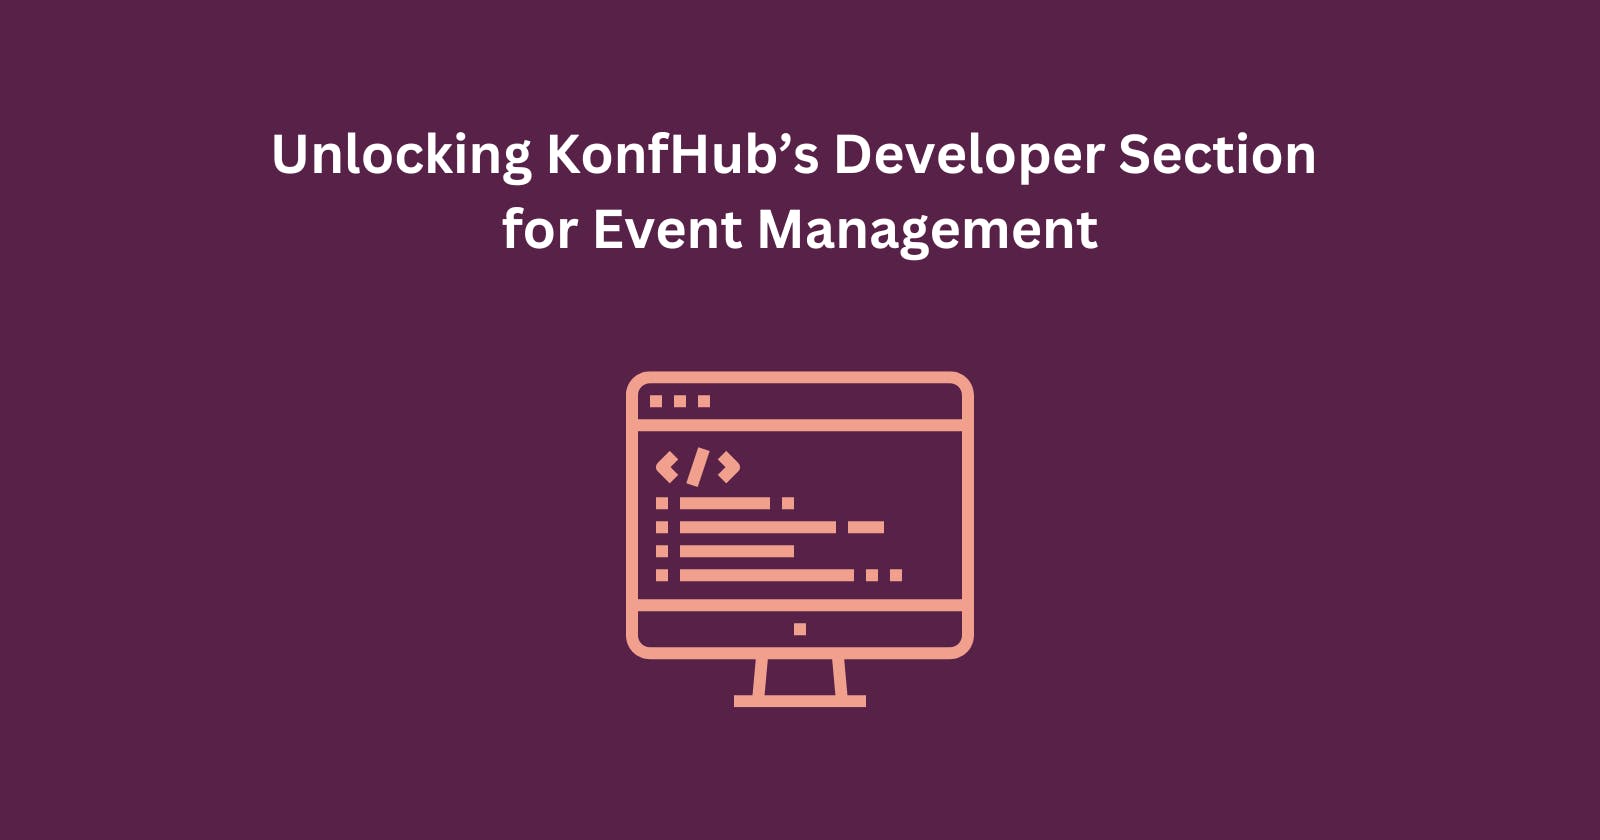 Unlocking KonfHub's Developer Section for Event Management